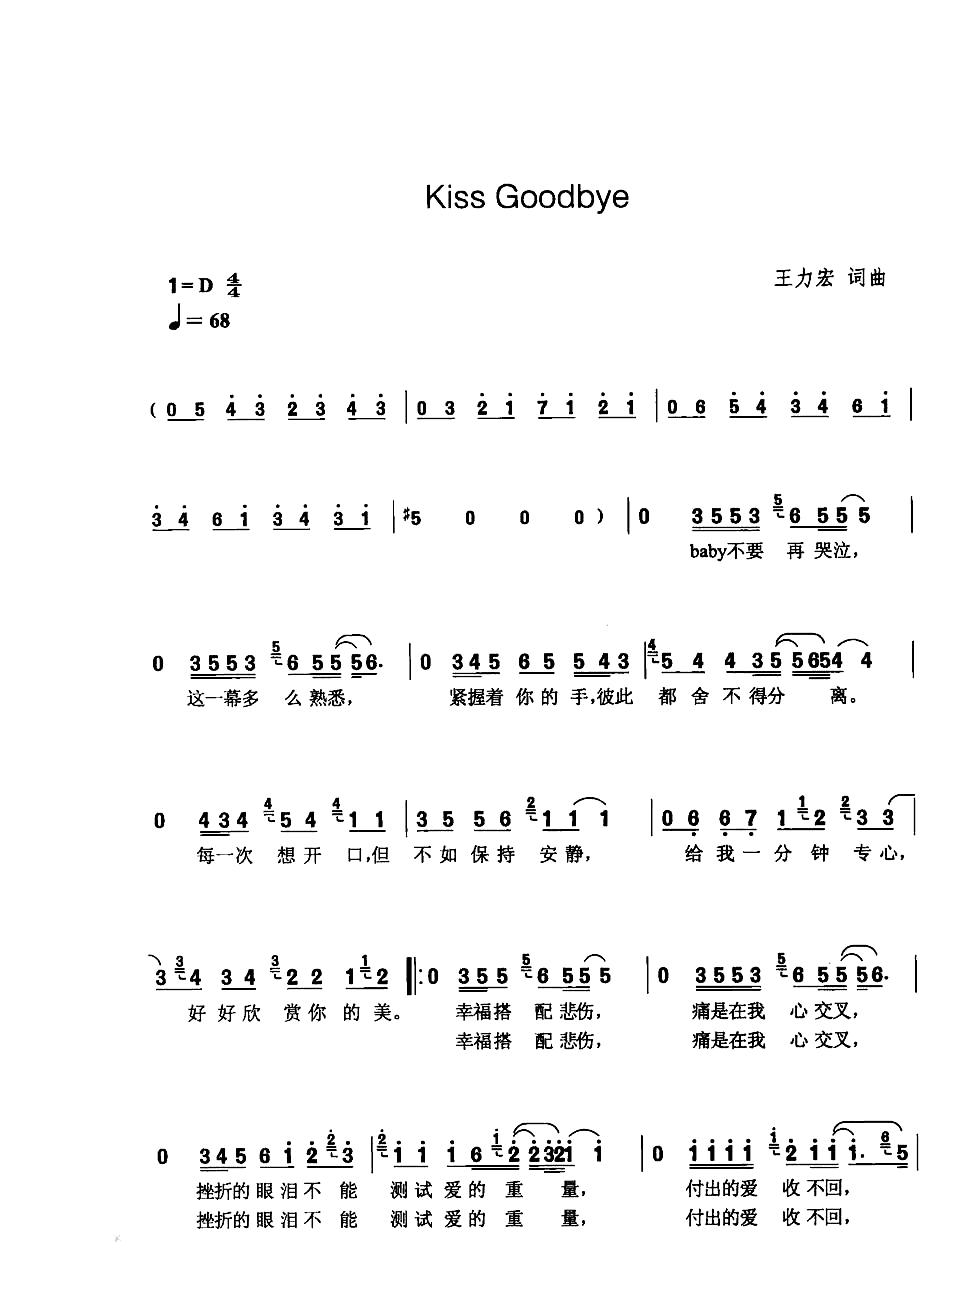 kiss Goodbye